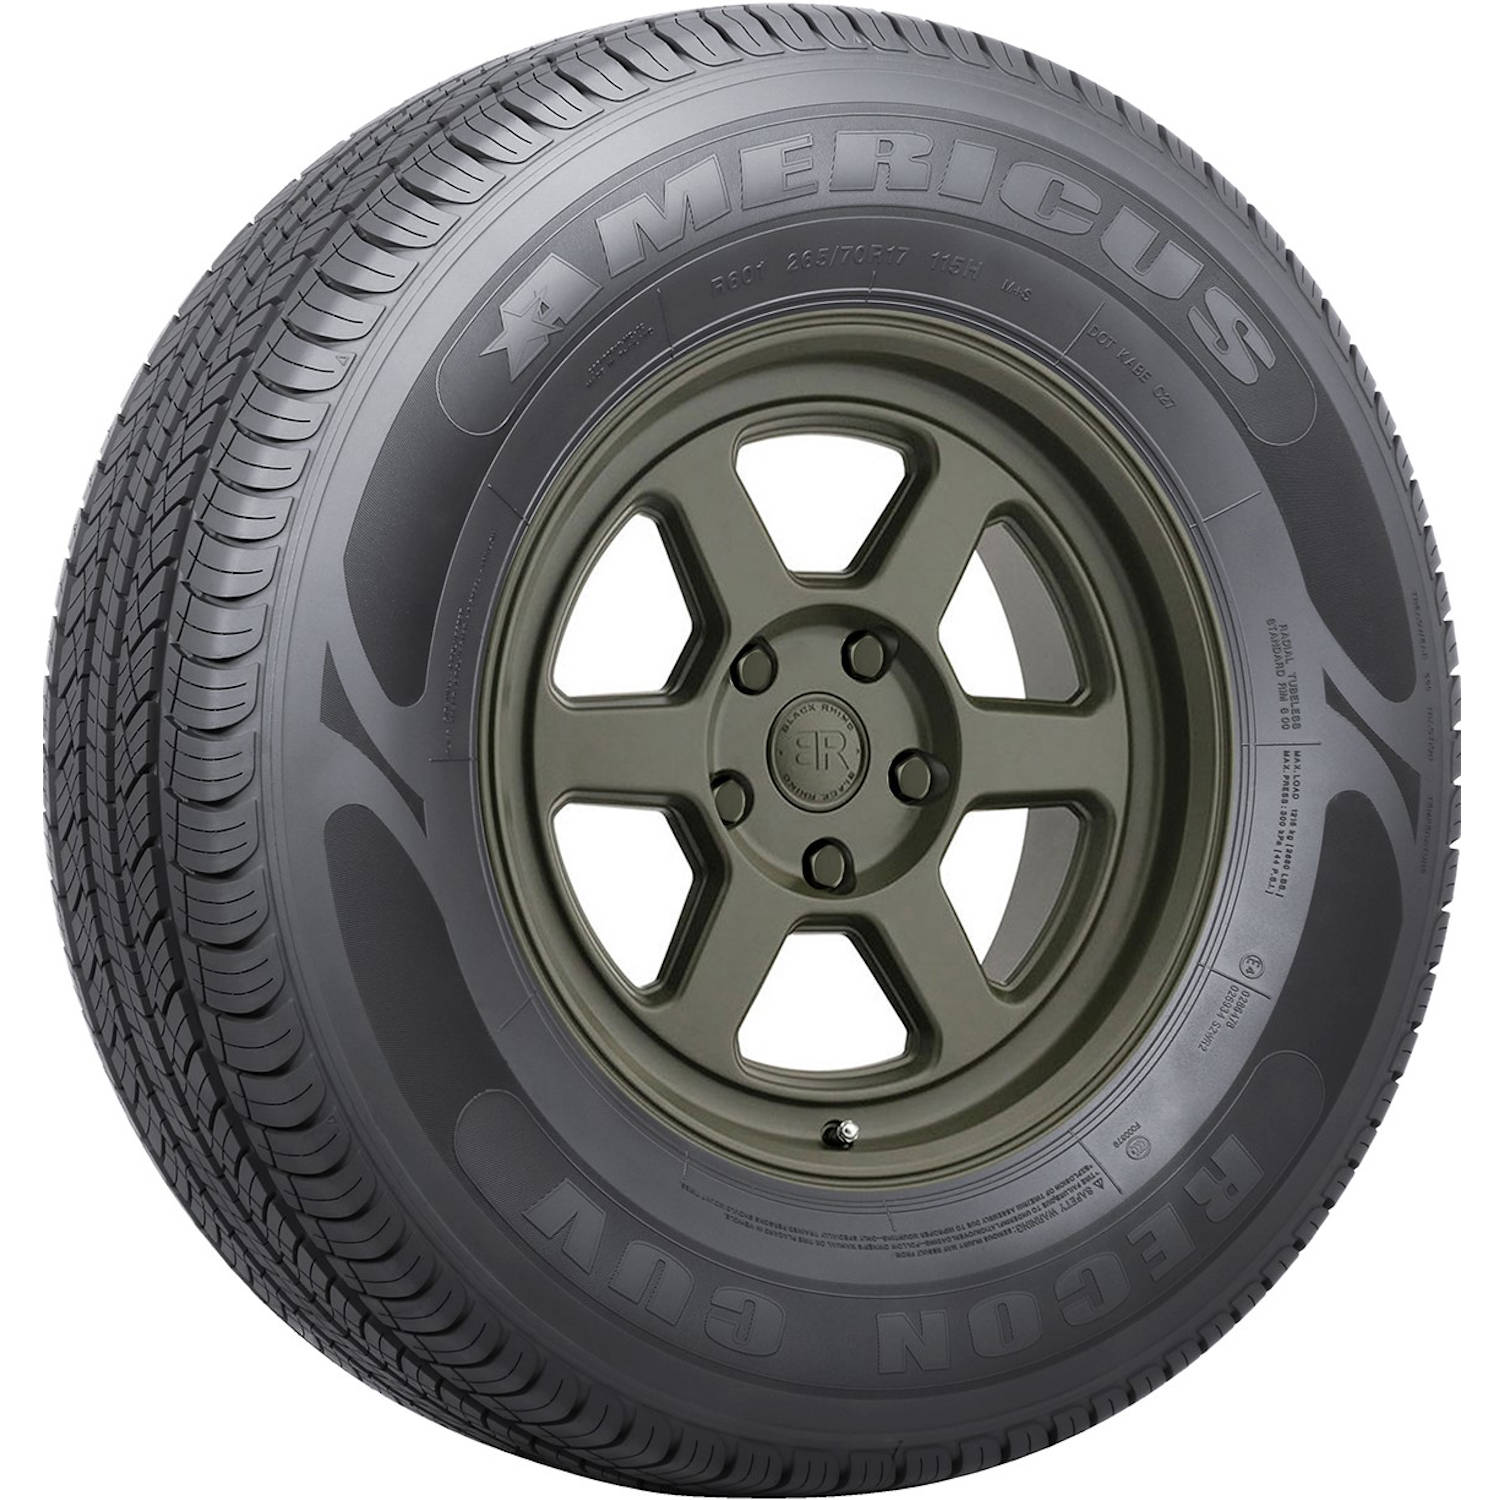 AMERICUS RECON CUV 225/75R15 (28.3X8.9R 15) Tires